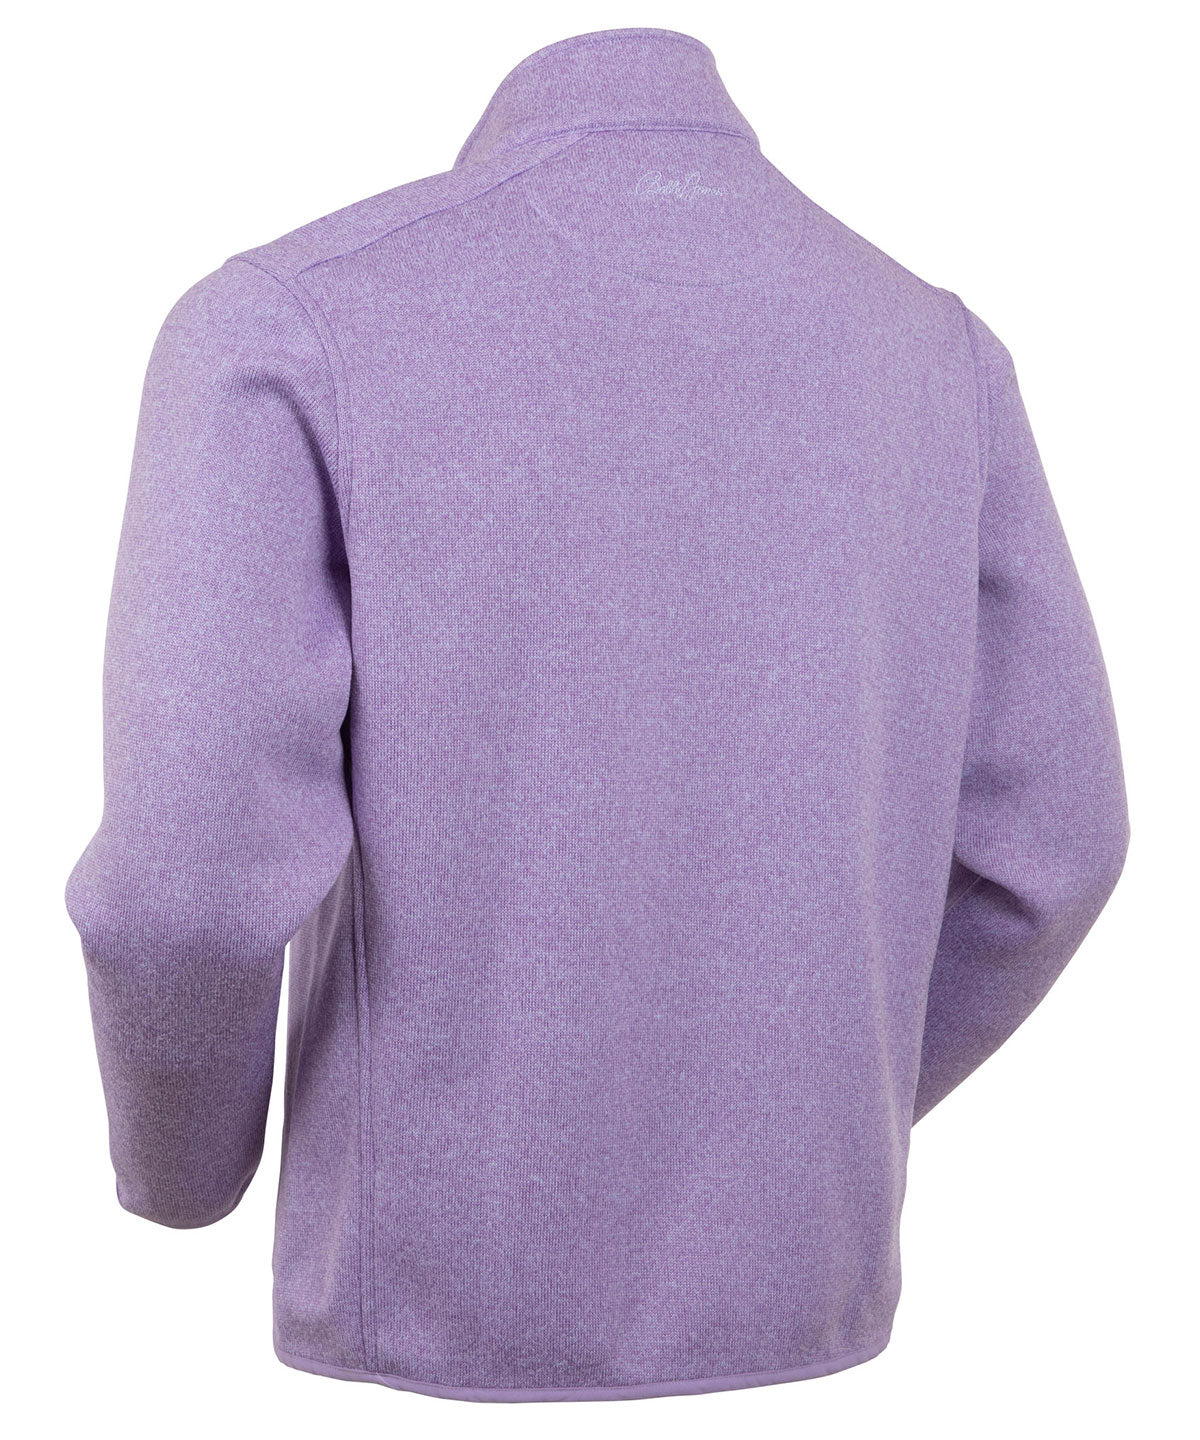 Heathered Quarter-Zip Performance Fleece Pullover